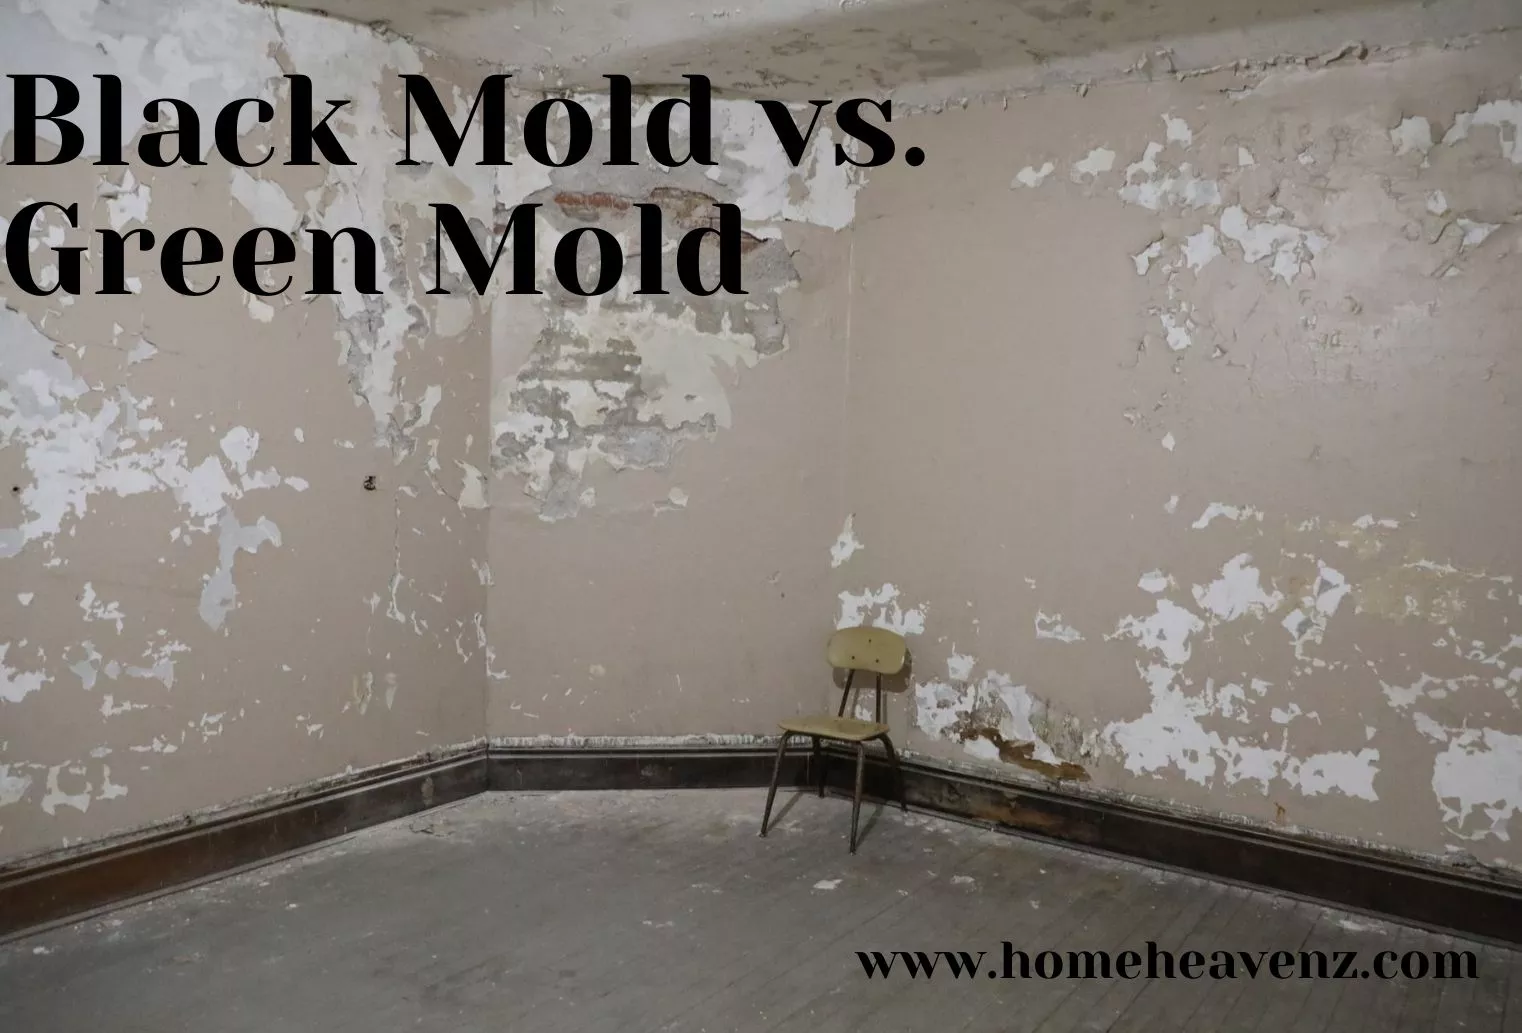 Black Mold vs. Green Mold